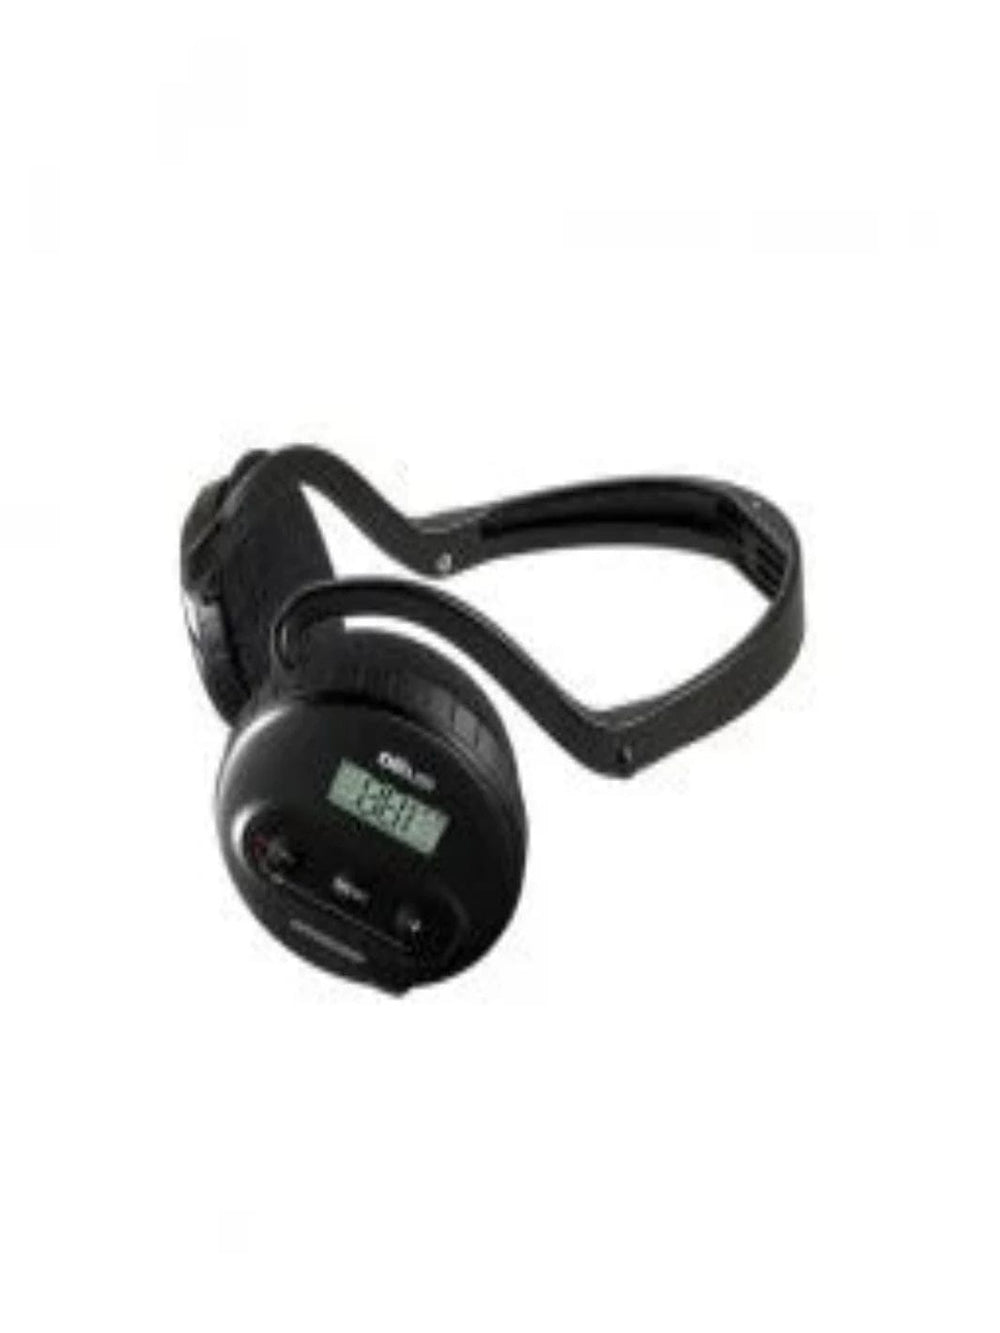 XP Deus Metal Detector with X35 9" Coil and WS4 Headphones - Treasure Coast Metal Detectors